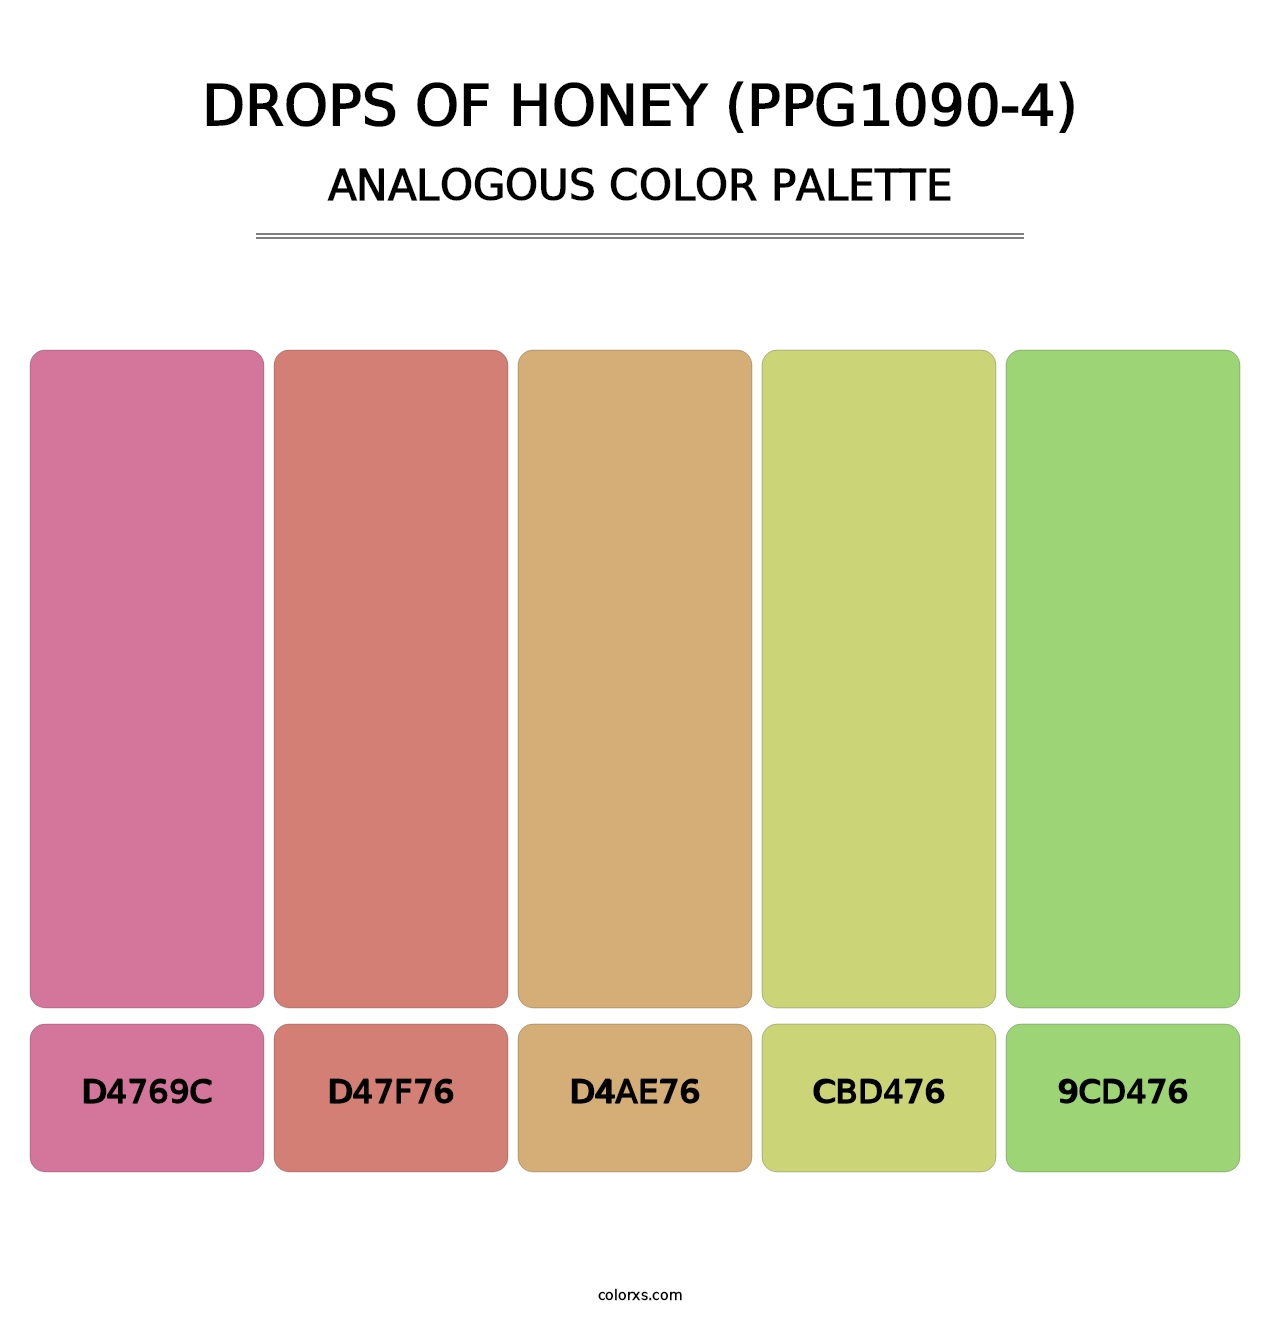 Drops Of Honey (PPG1090-4) - Analogous Color Palette